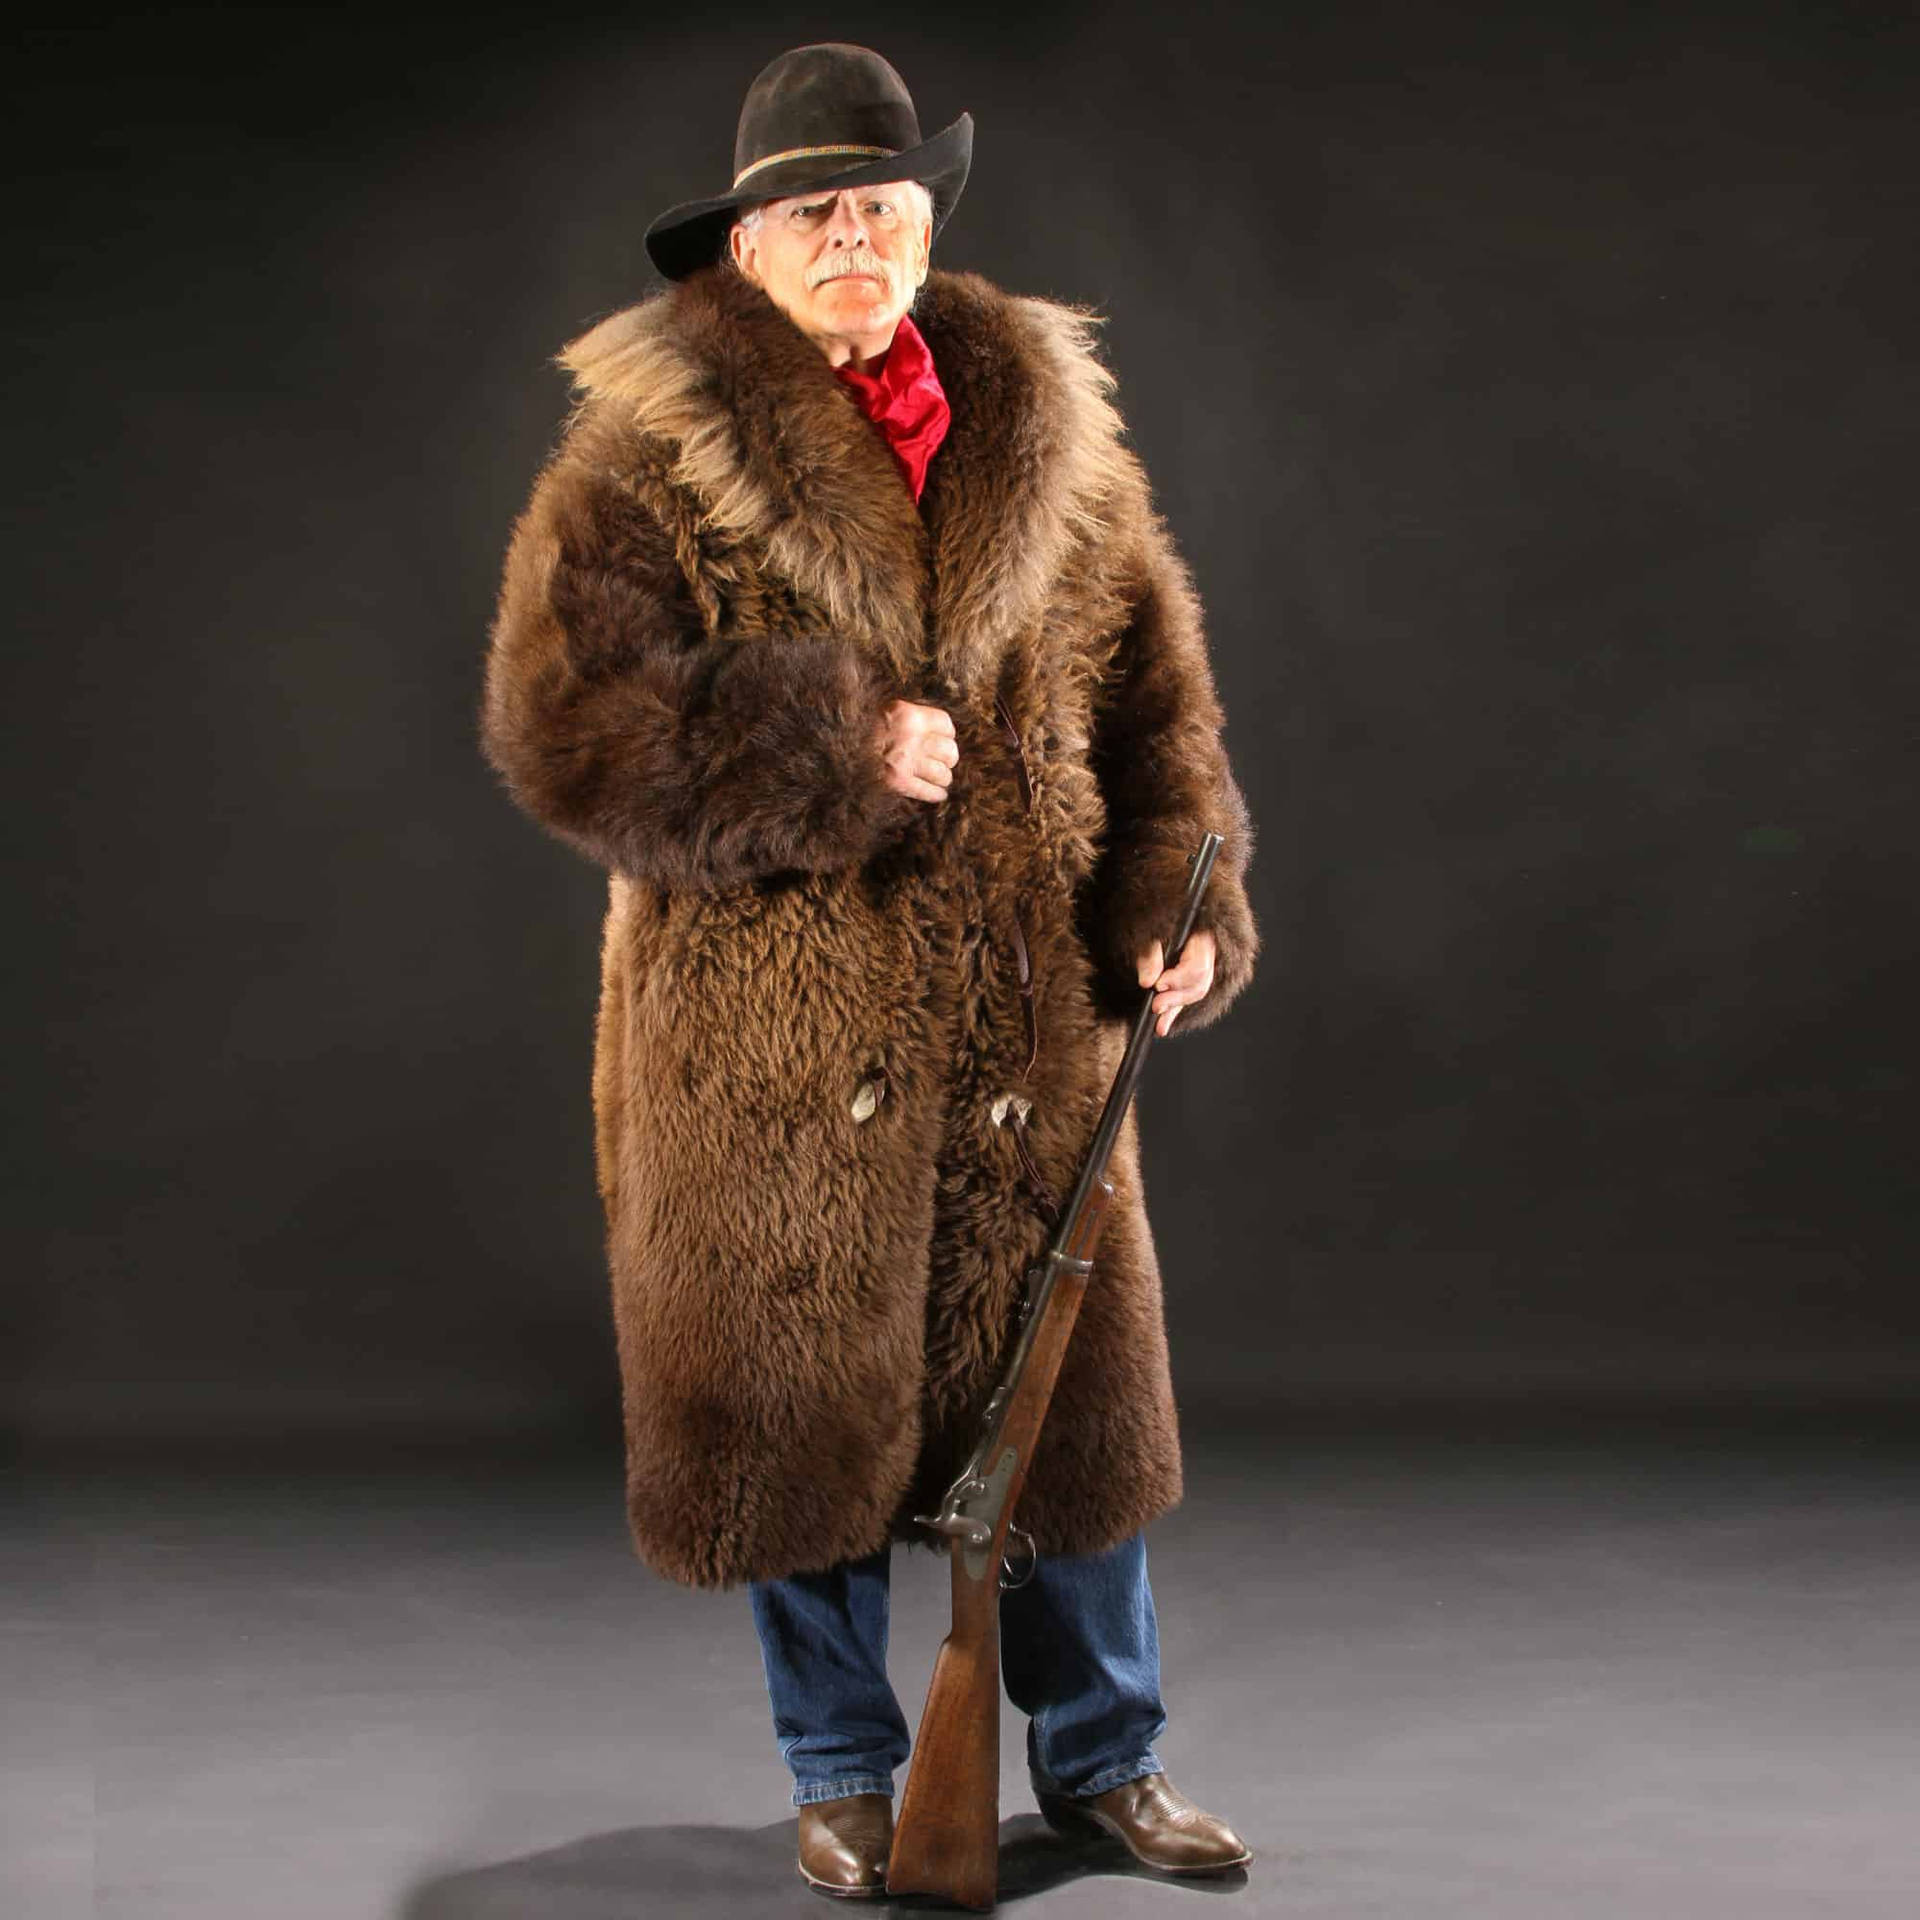 Animal Fur Coat In Brown Shade Background